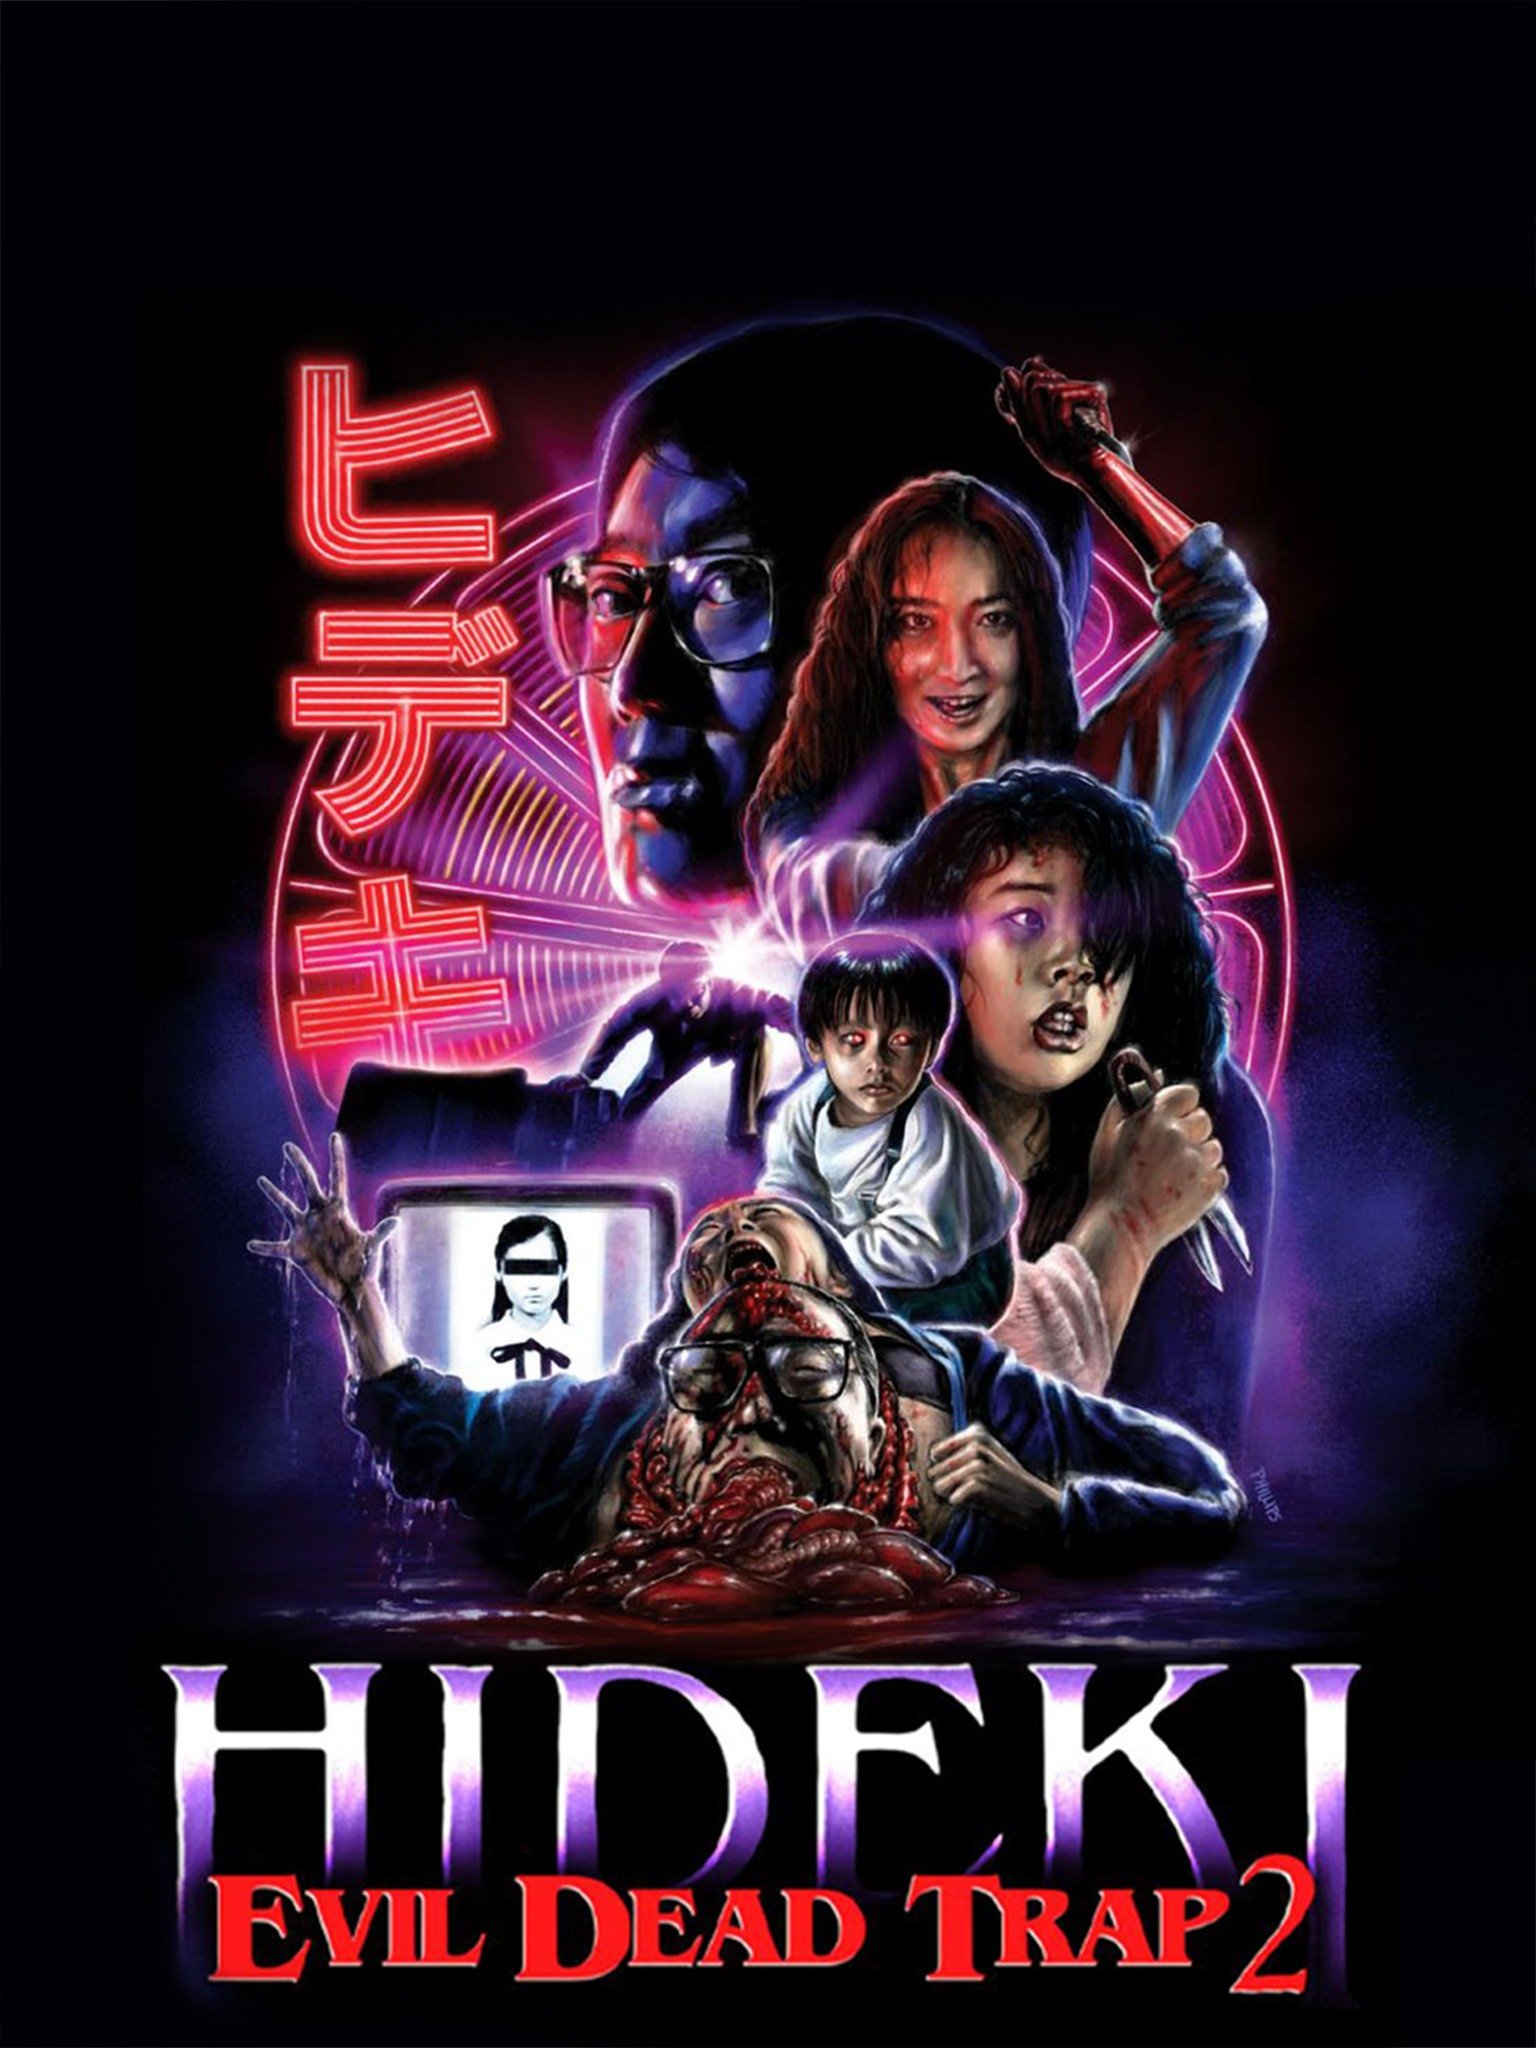 Where to watch Evil Dead Trap 2 Hideki picture